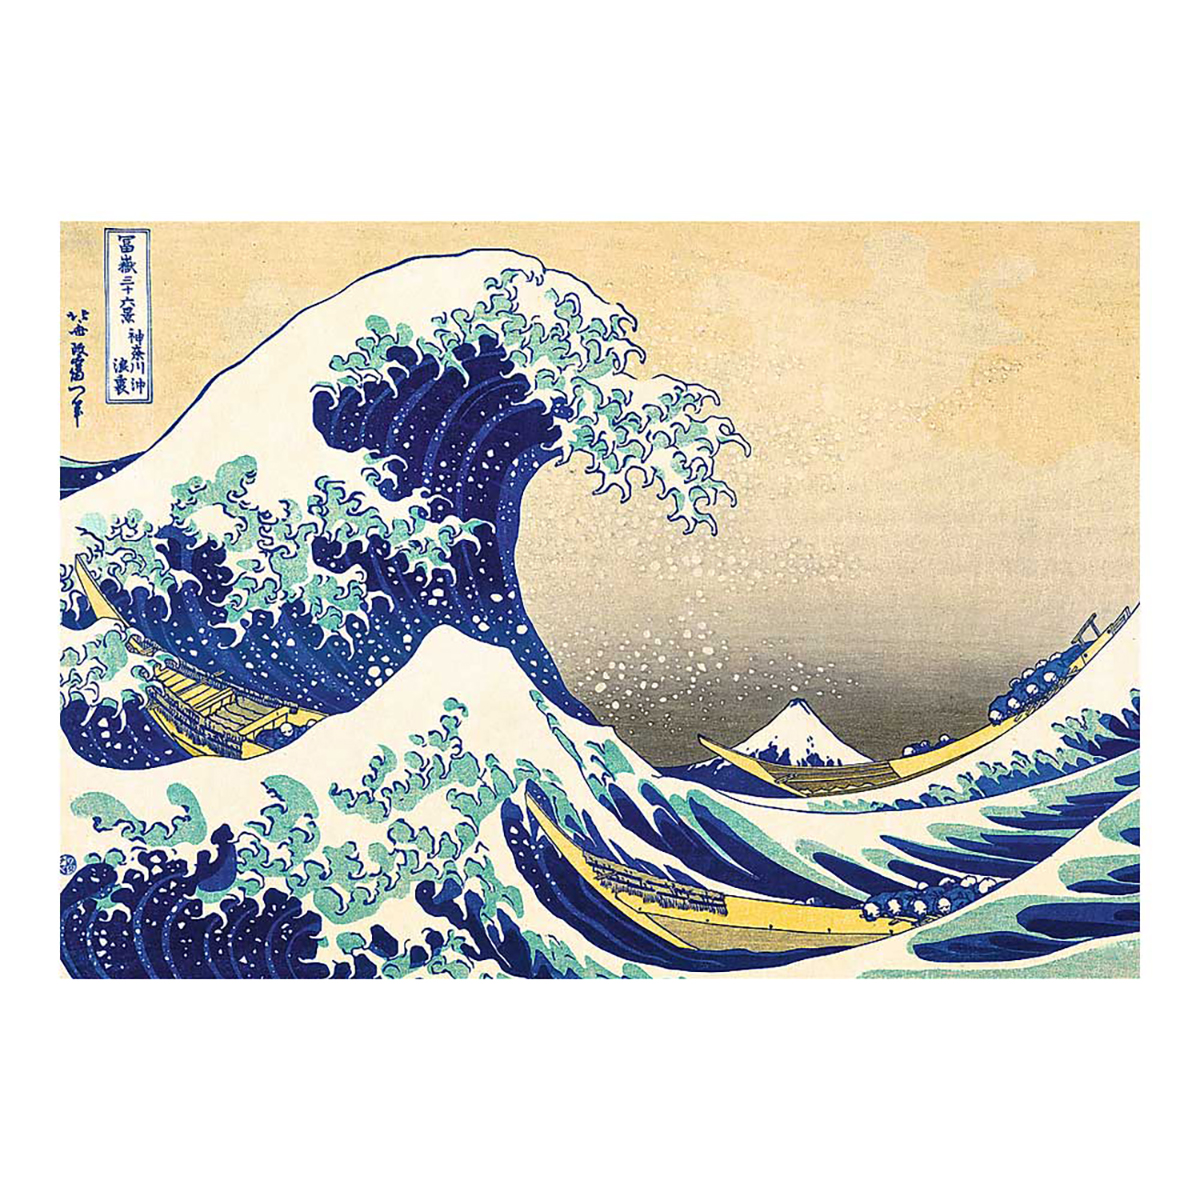 Welle Katsushika: TREFL Kanagawa große Puzzle Hokusai von Die